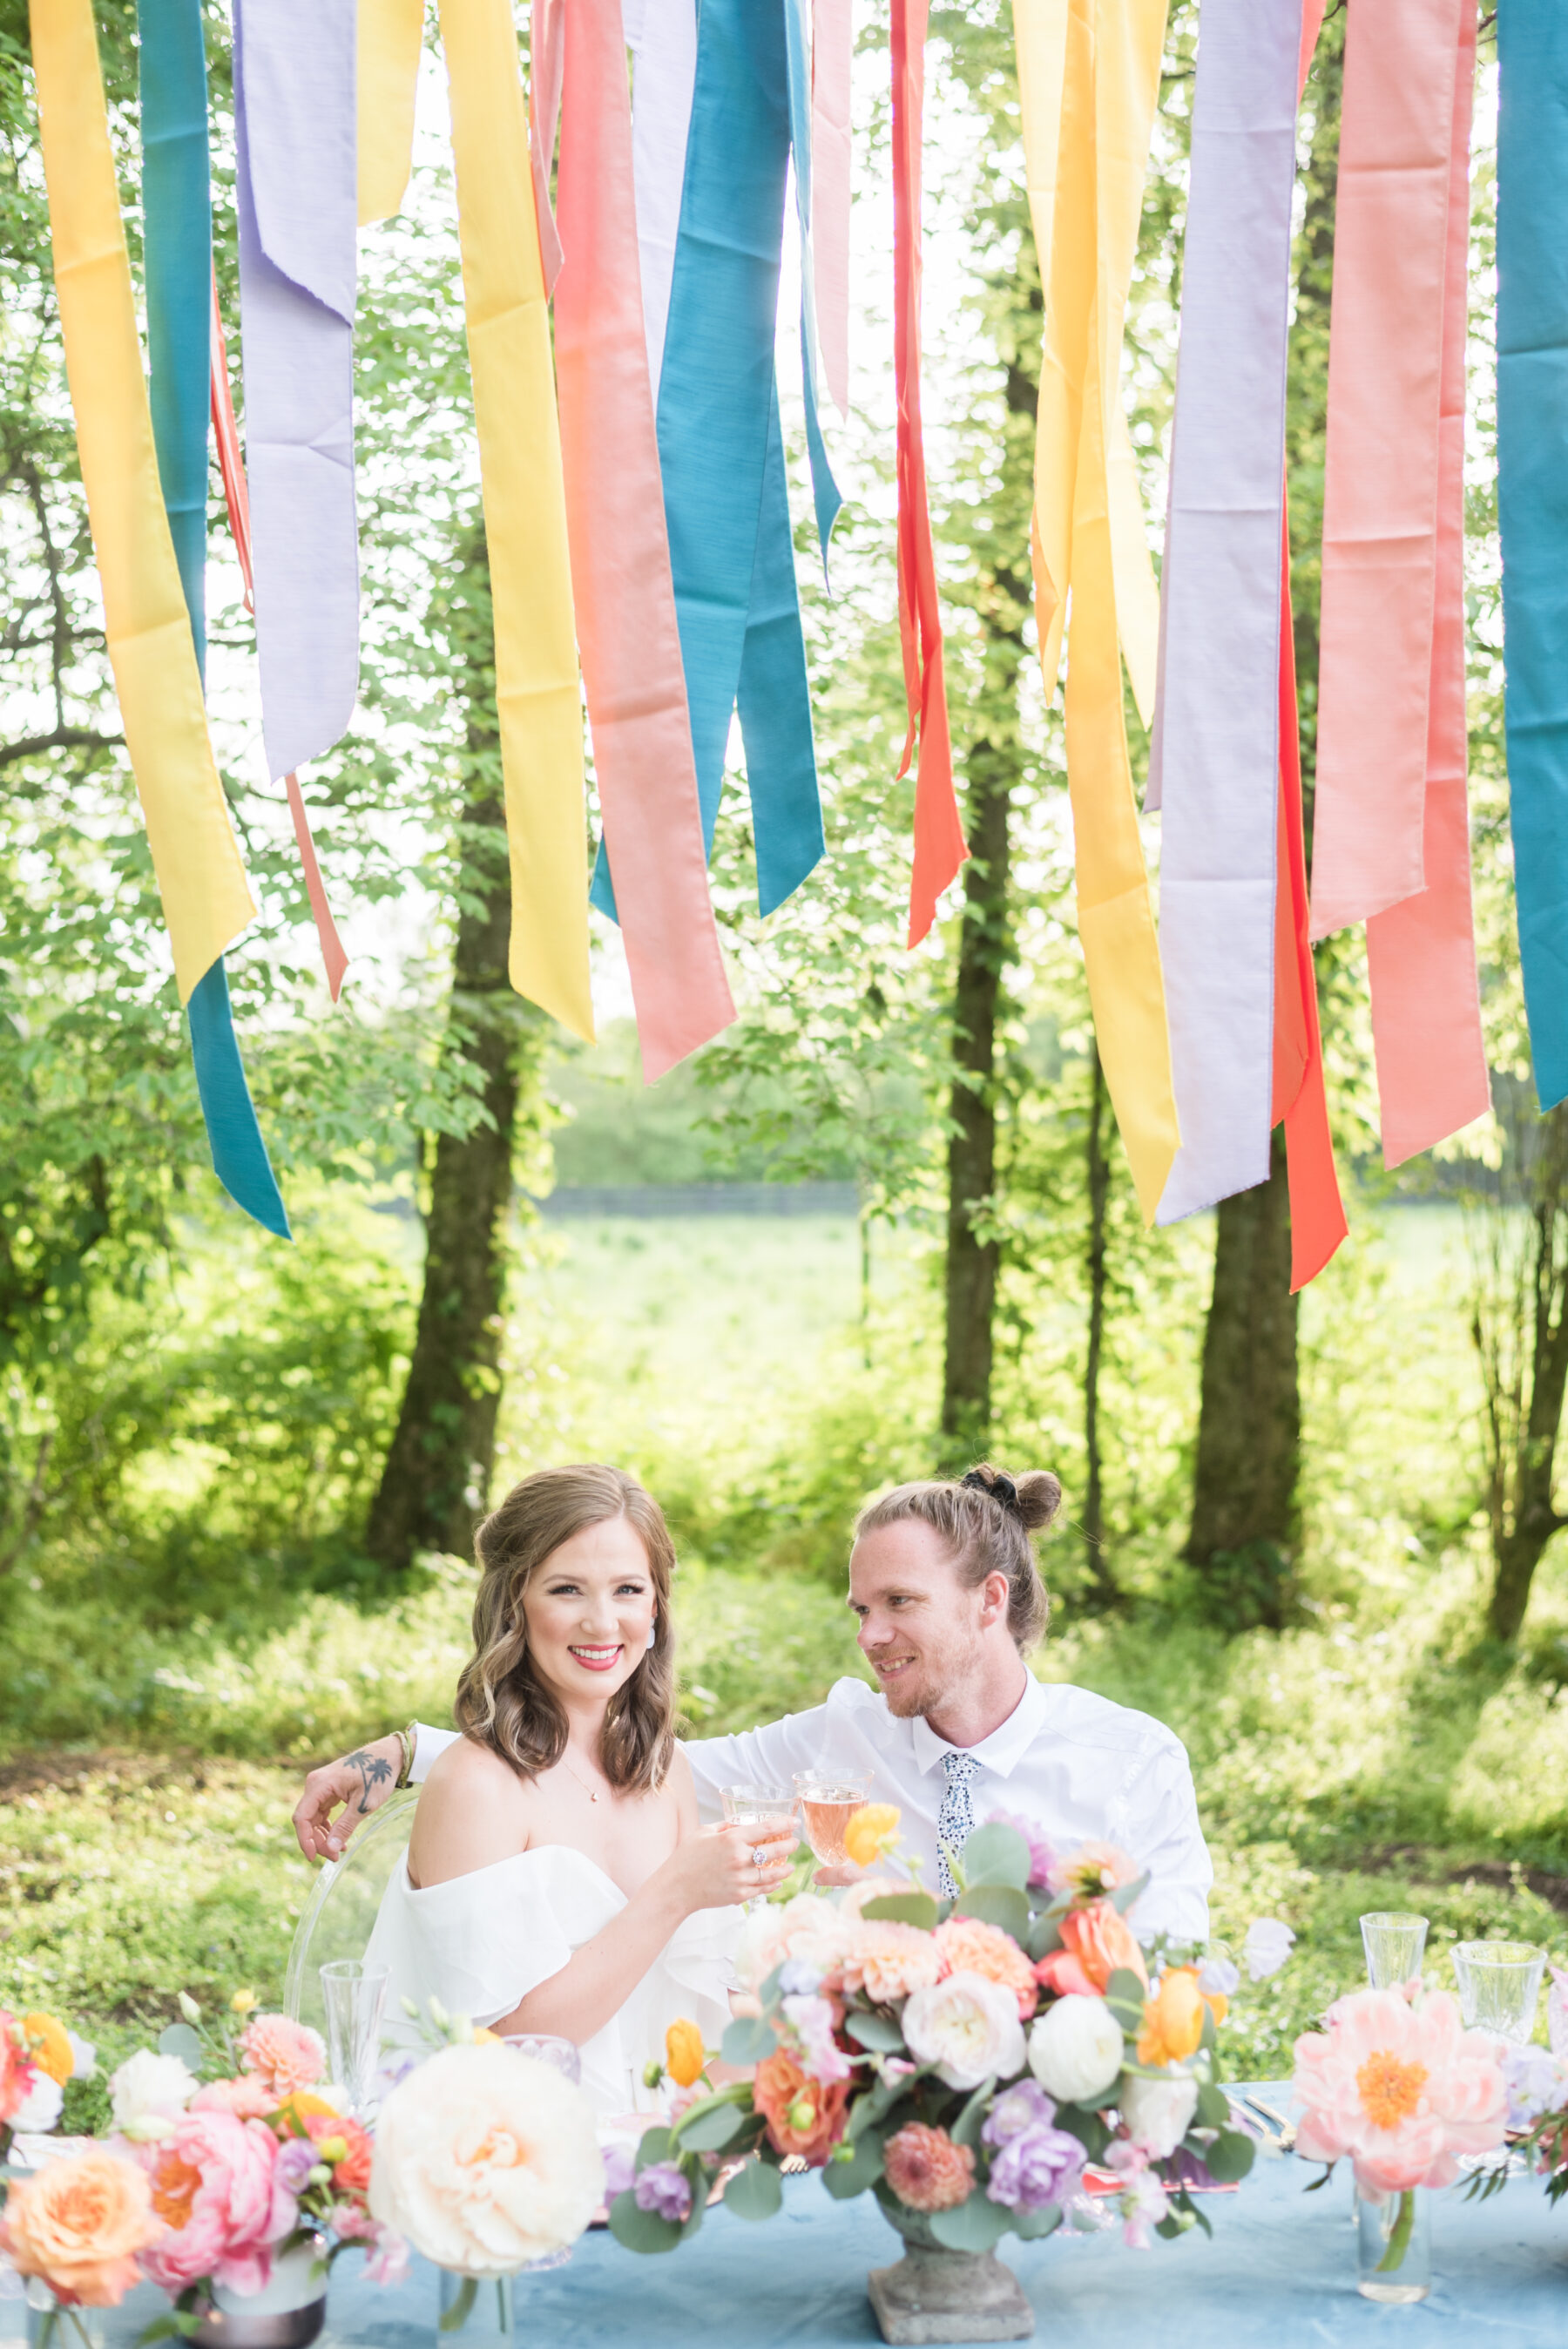 Colorful hanging wedding table decor